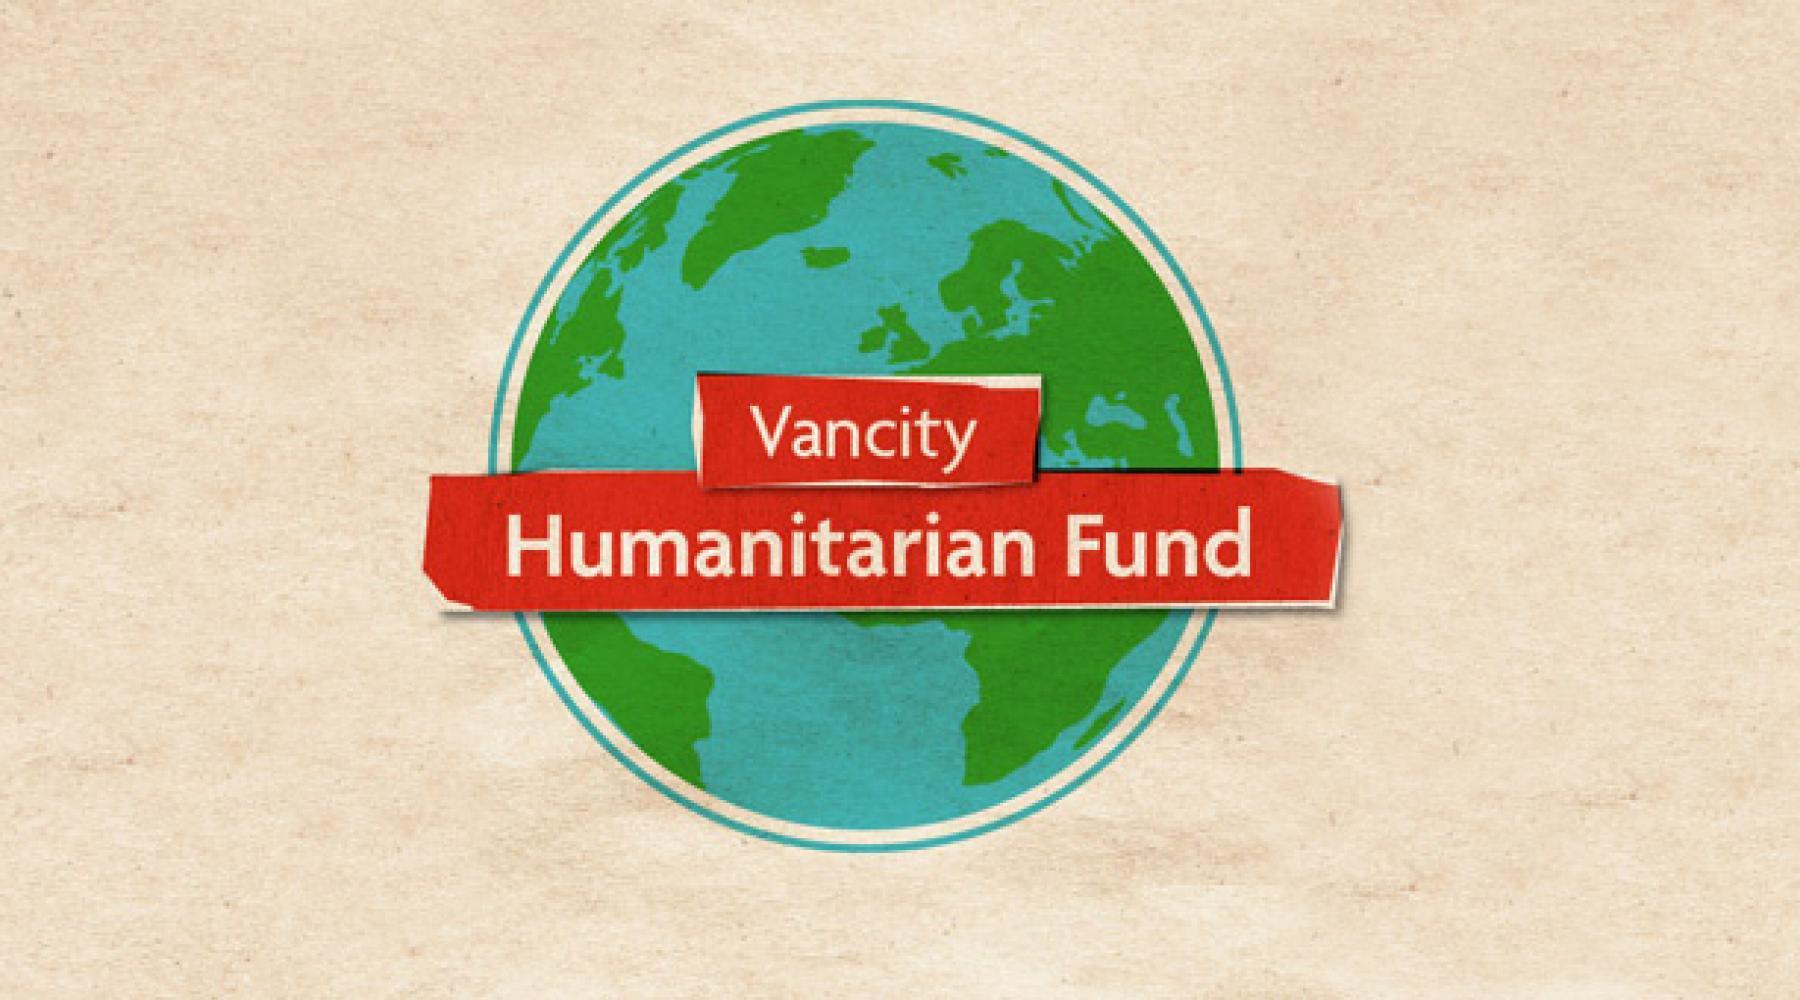 Vancity Humanitarian Fund logo